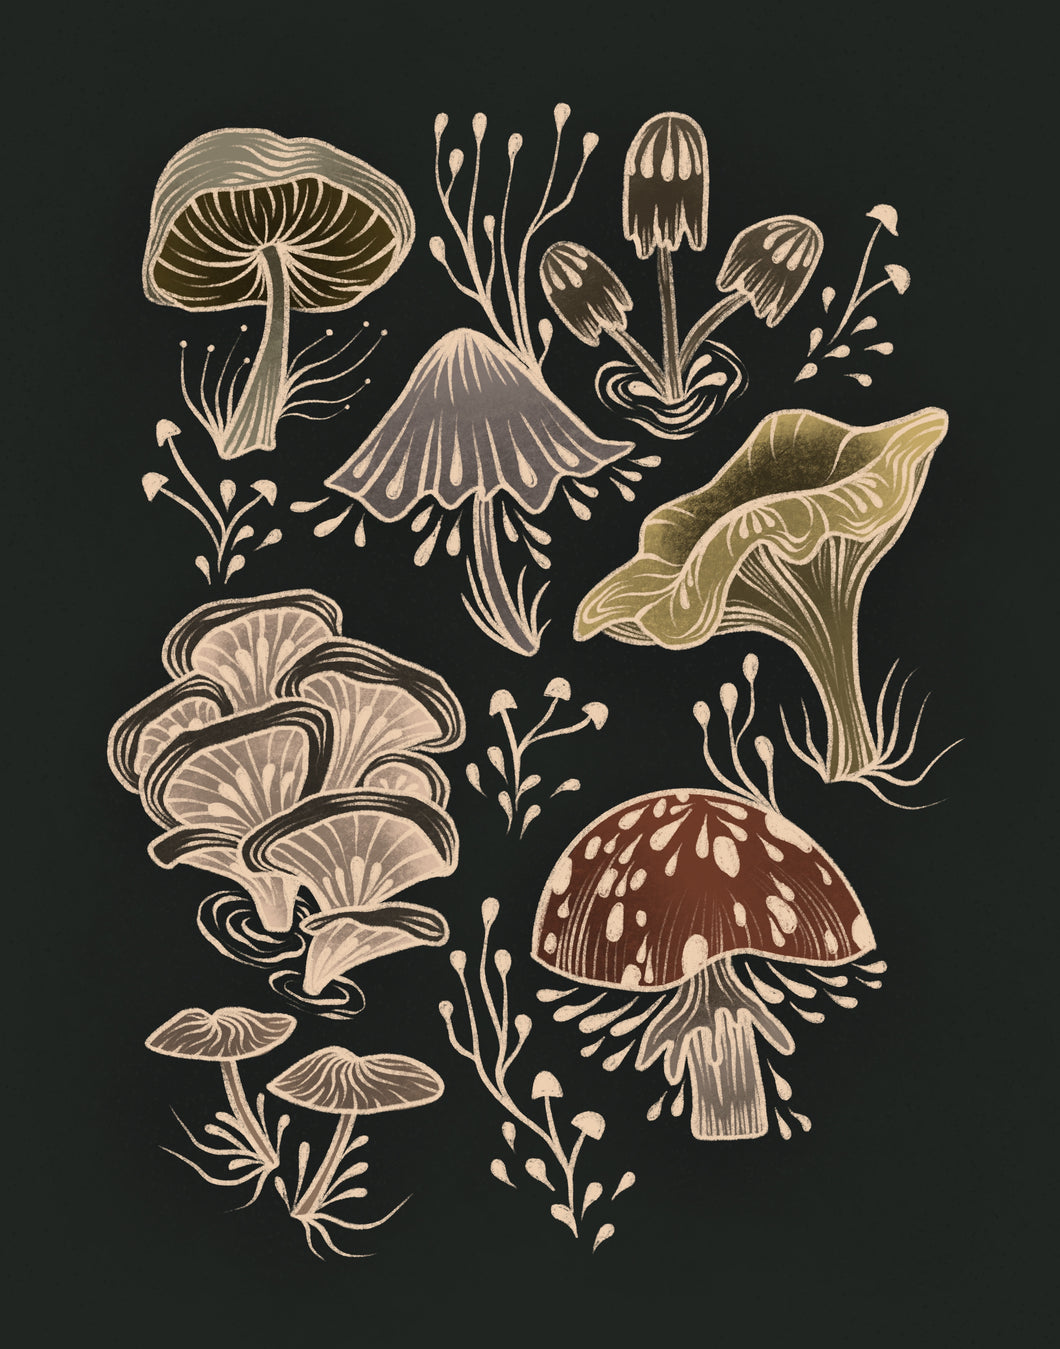 Mushroom Giclee Print (5x7